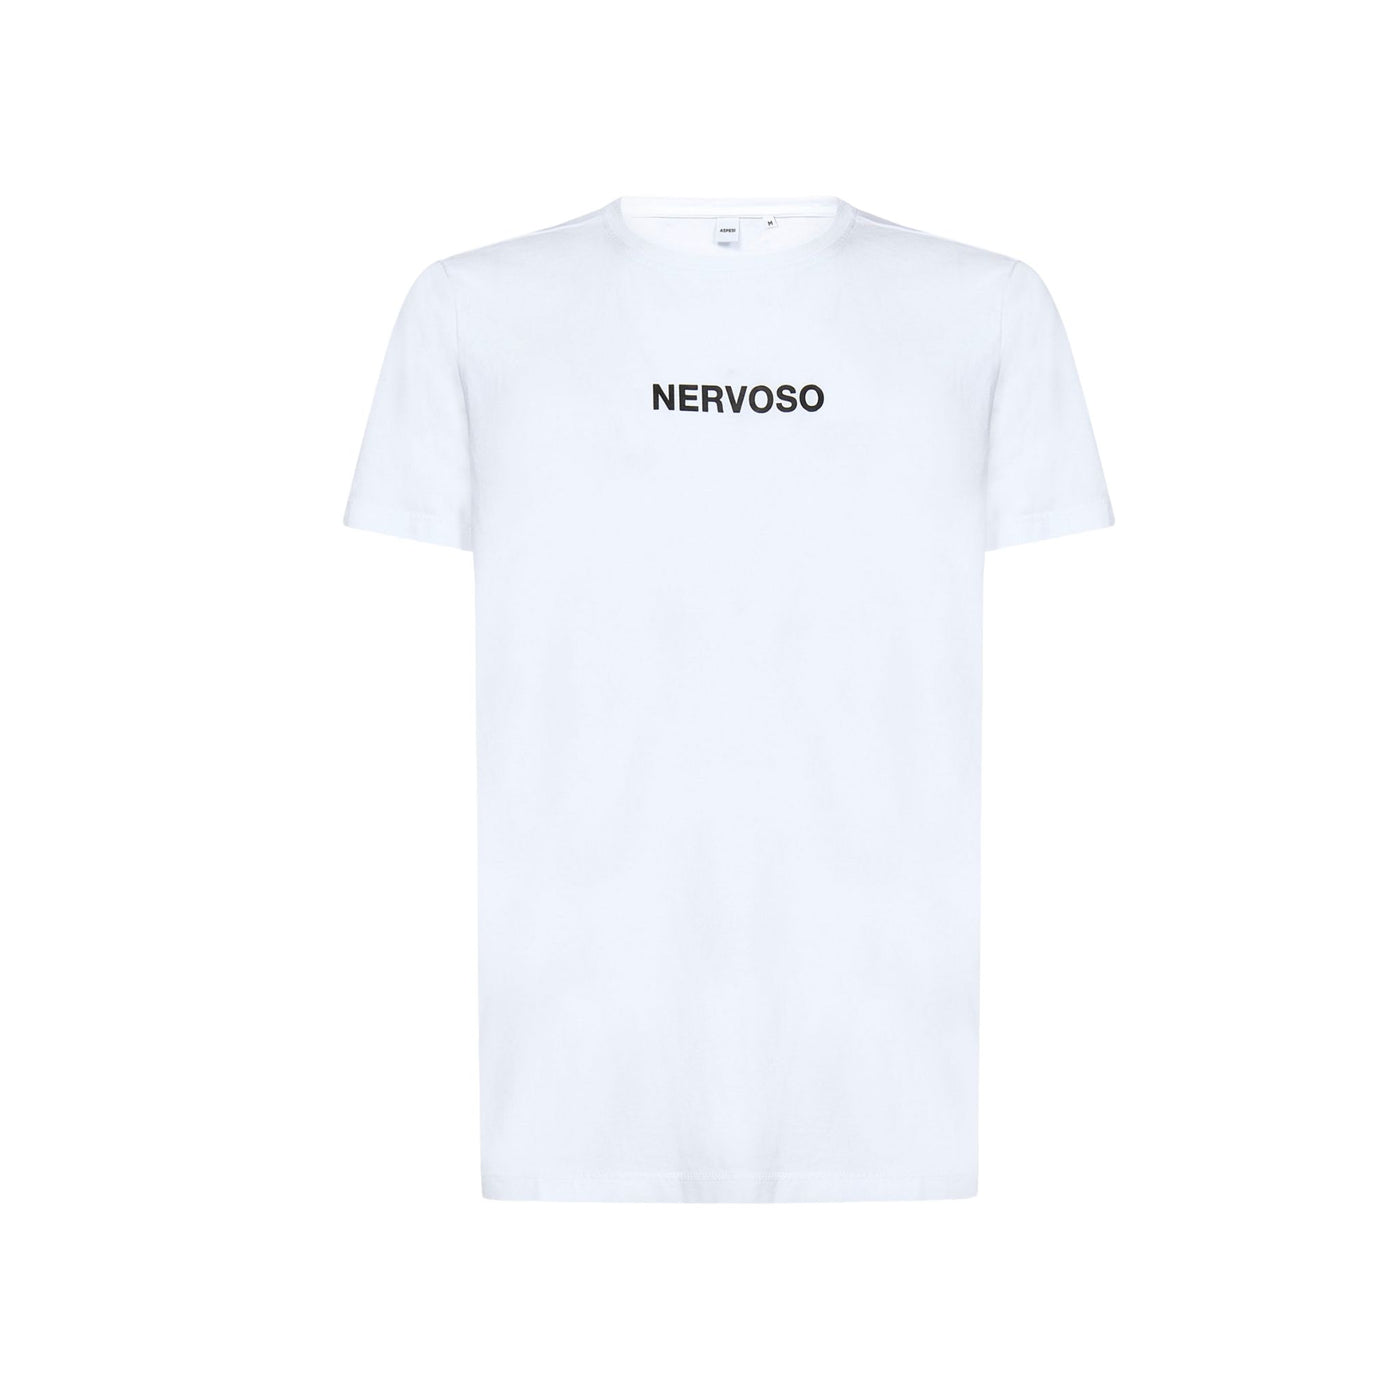 "NERVOUS" Men's T-Shirt